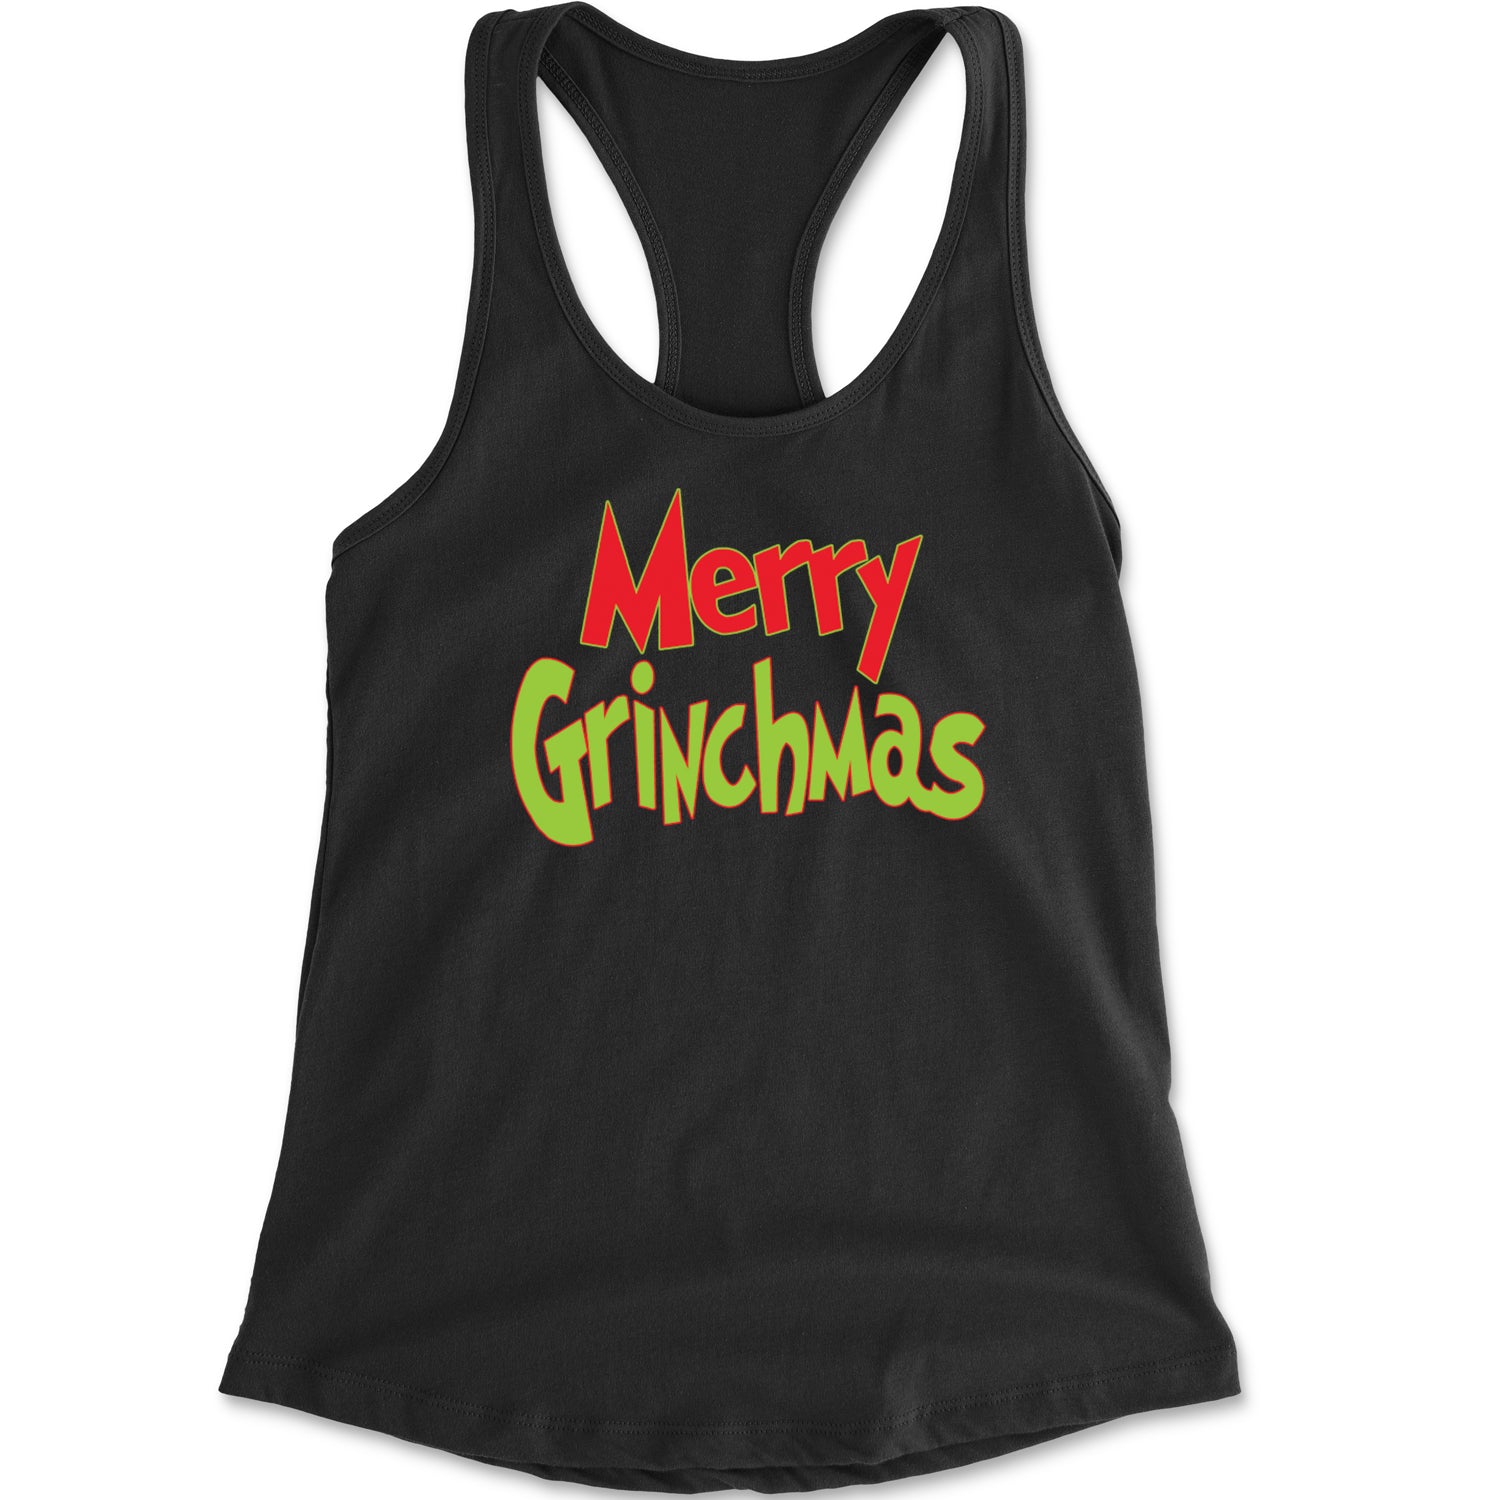 Merry Grinchmas Jolly Merry Christmas Racerback Tank Top for Women